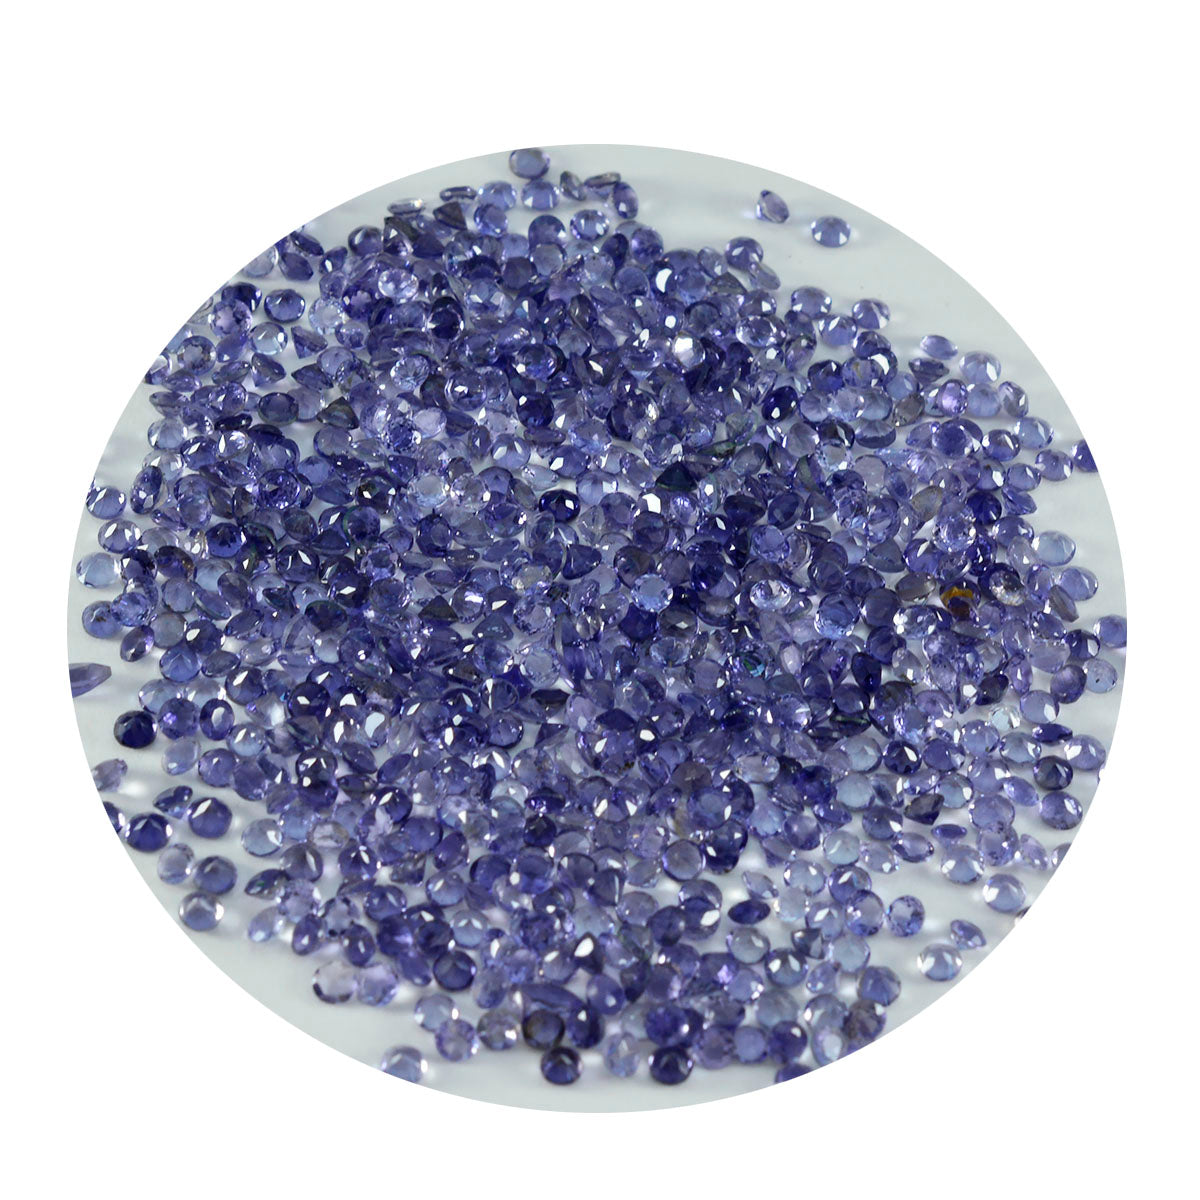 Riyogems 1PC Blue Iolite Faceted 2x2 mm Round Shape excellent Quality Gems